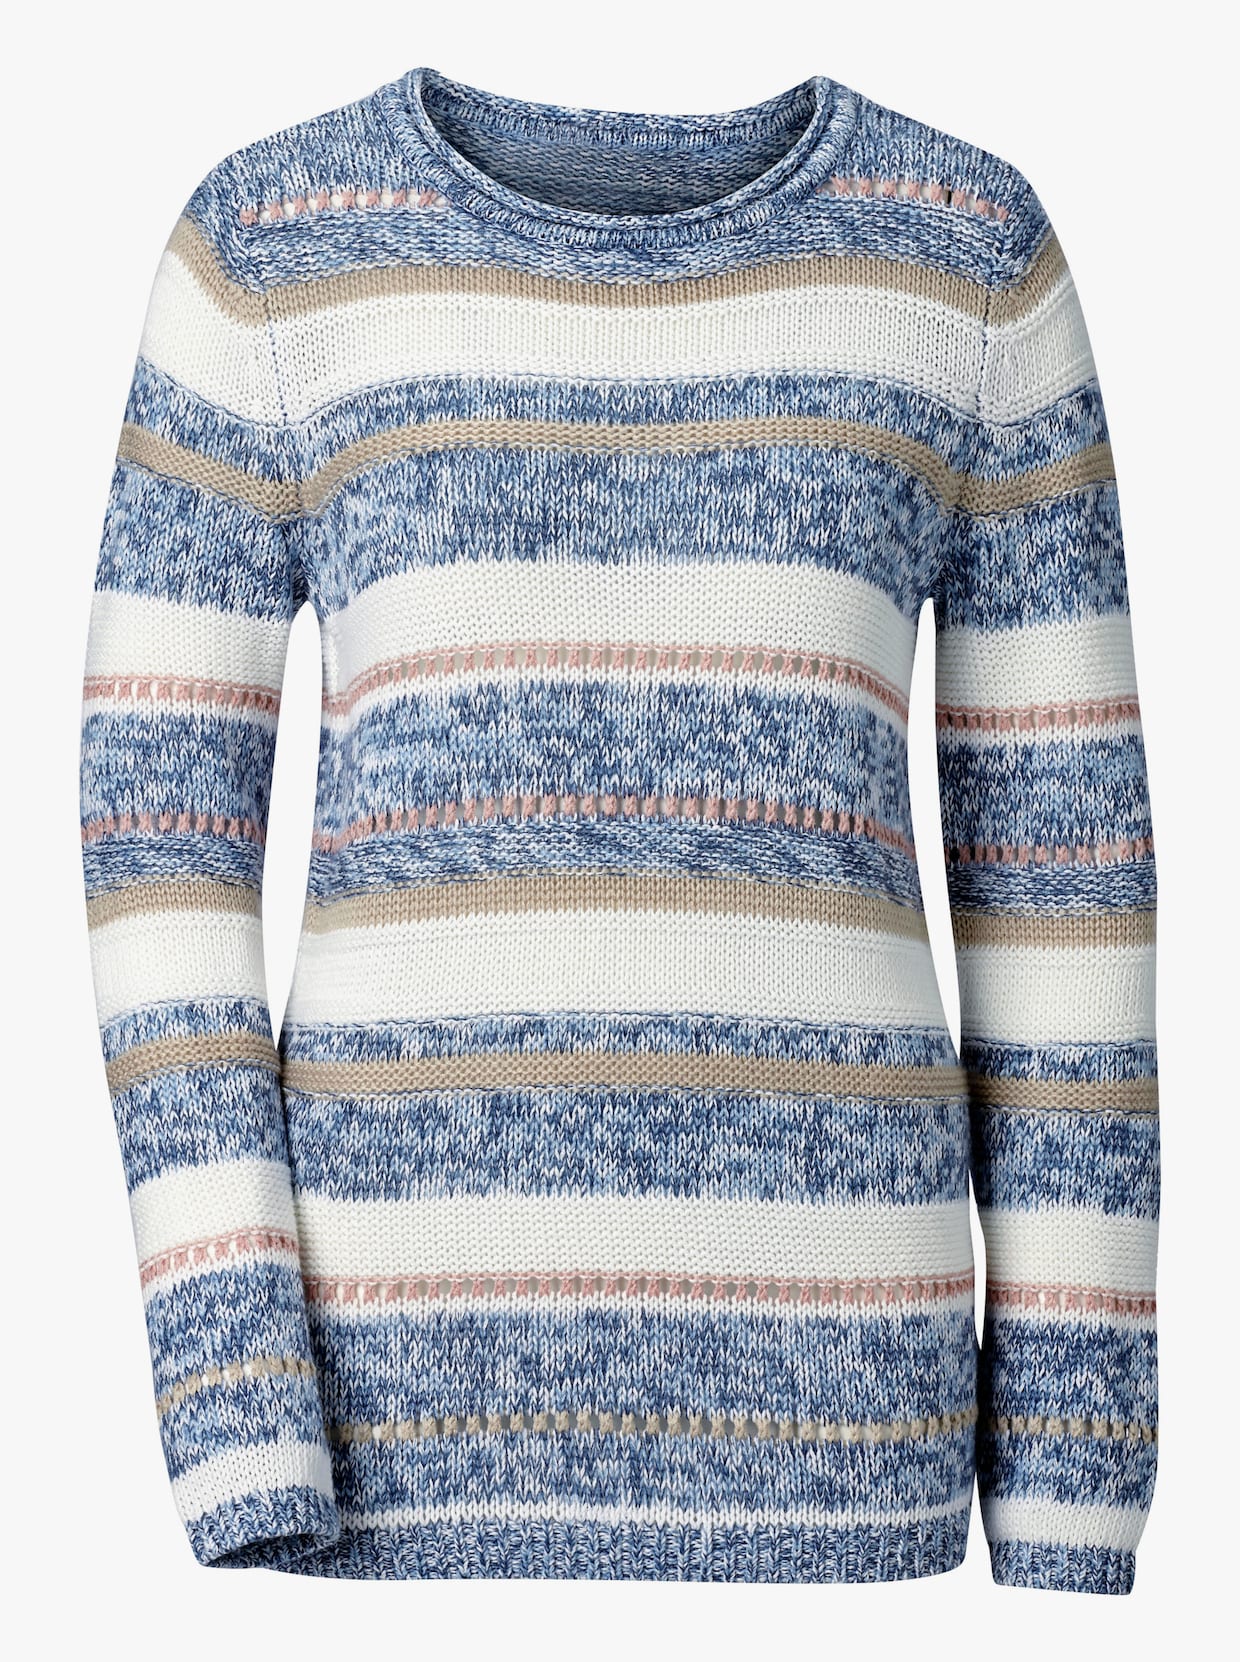 Pletený svetr - modrá-ecru-proužek